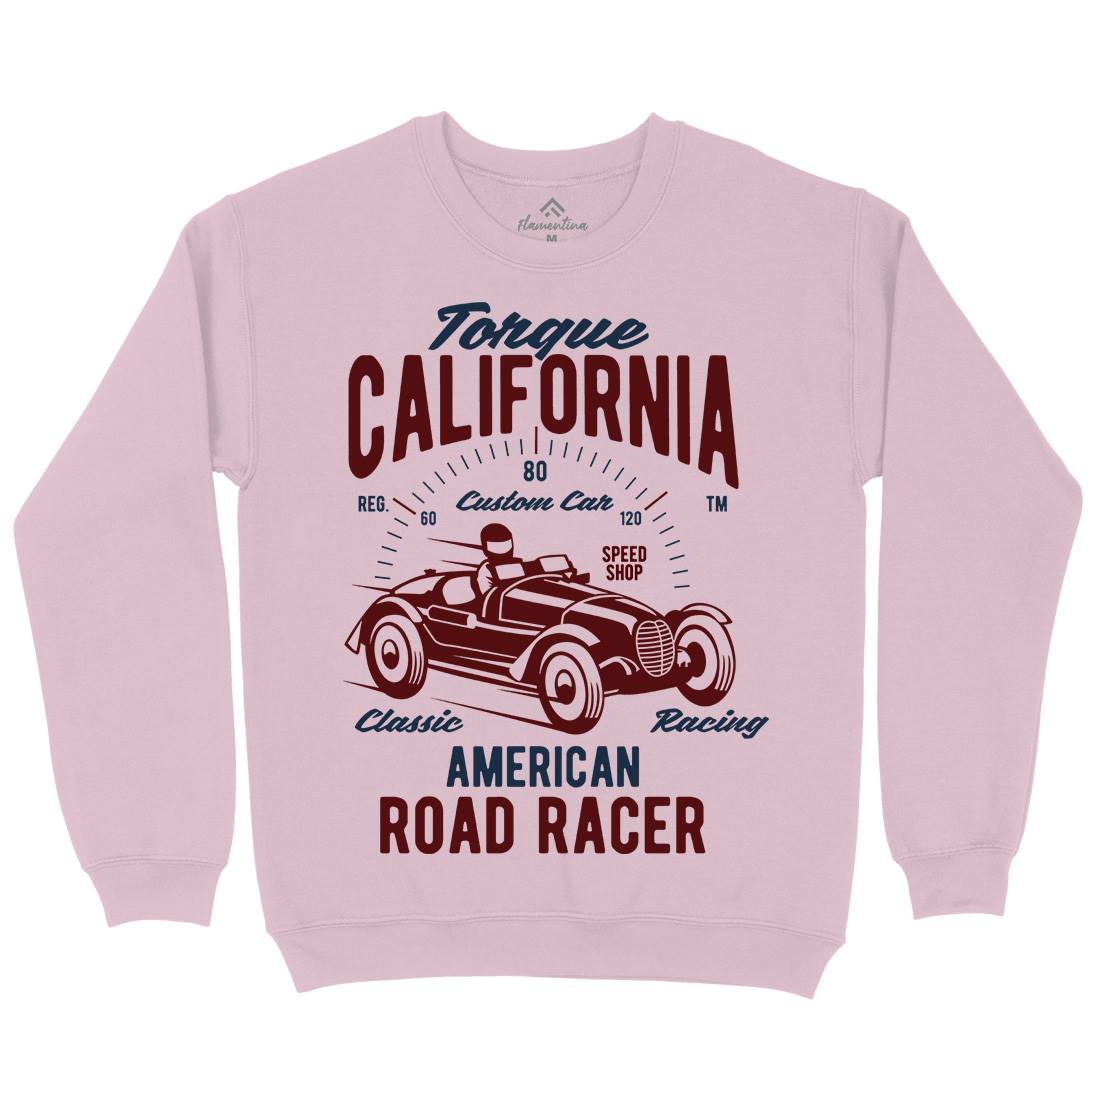 Torque California Kids Crew Neck Sweatshirt Cars B468